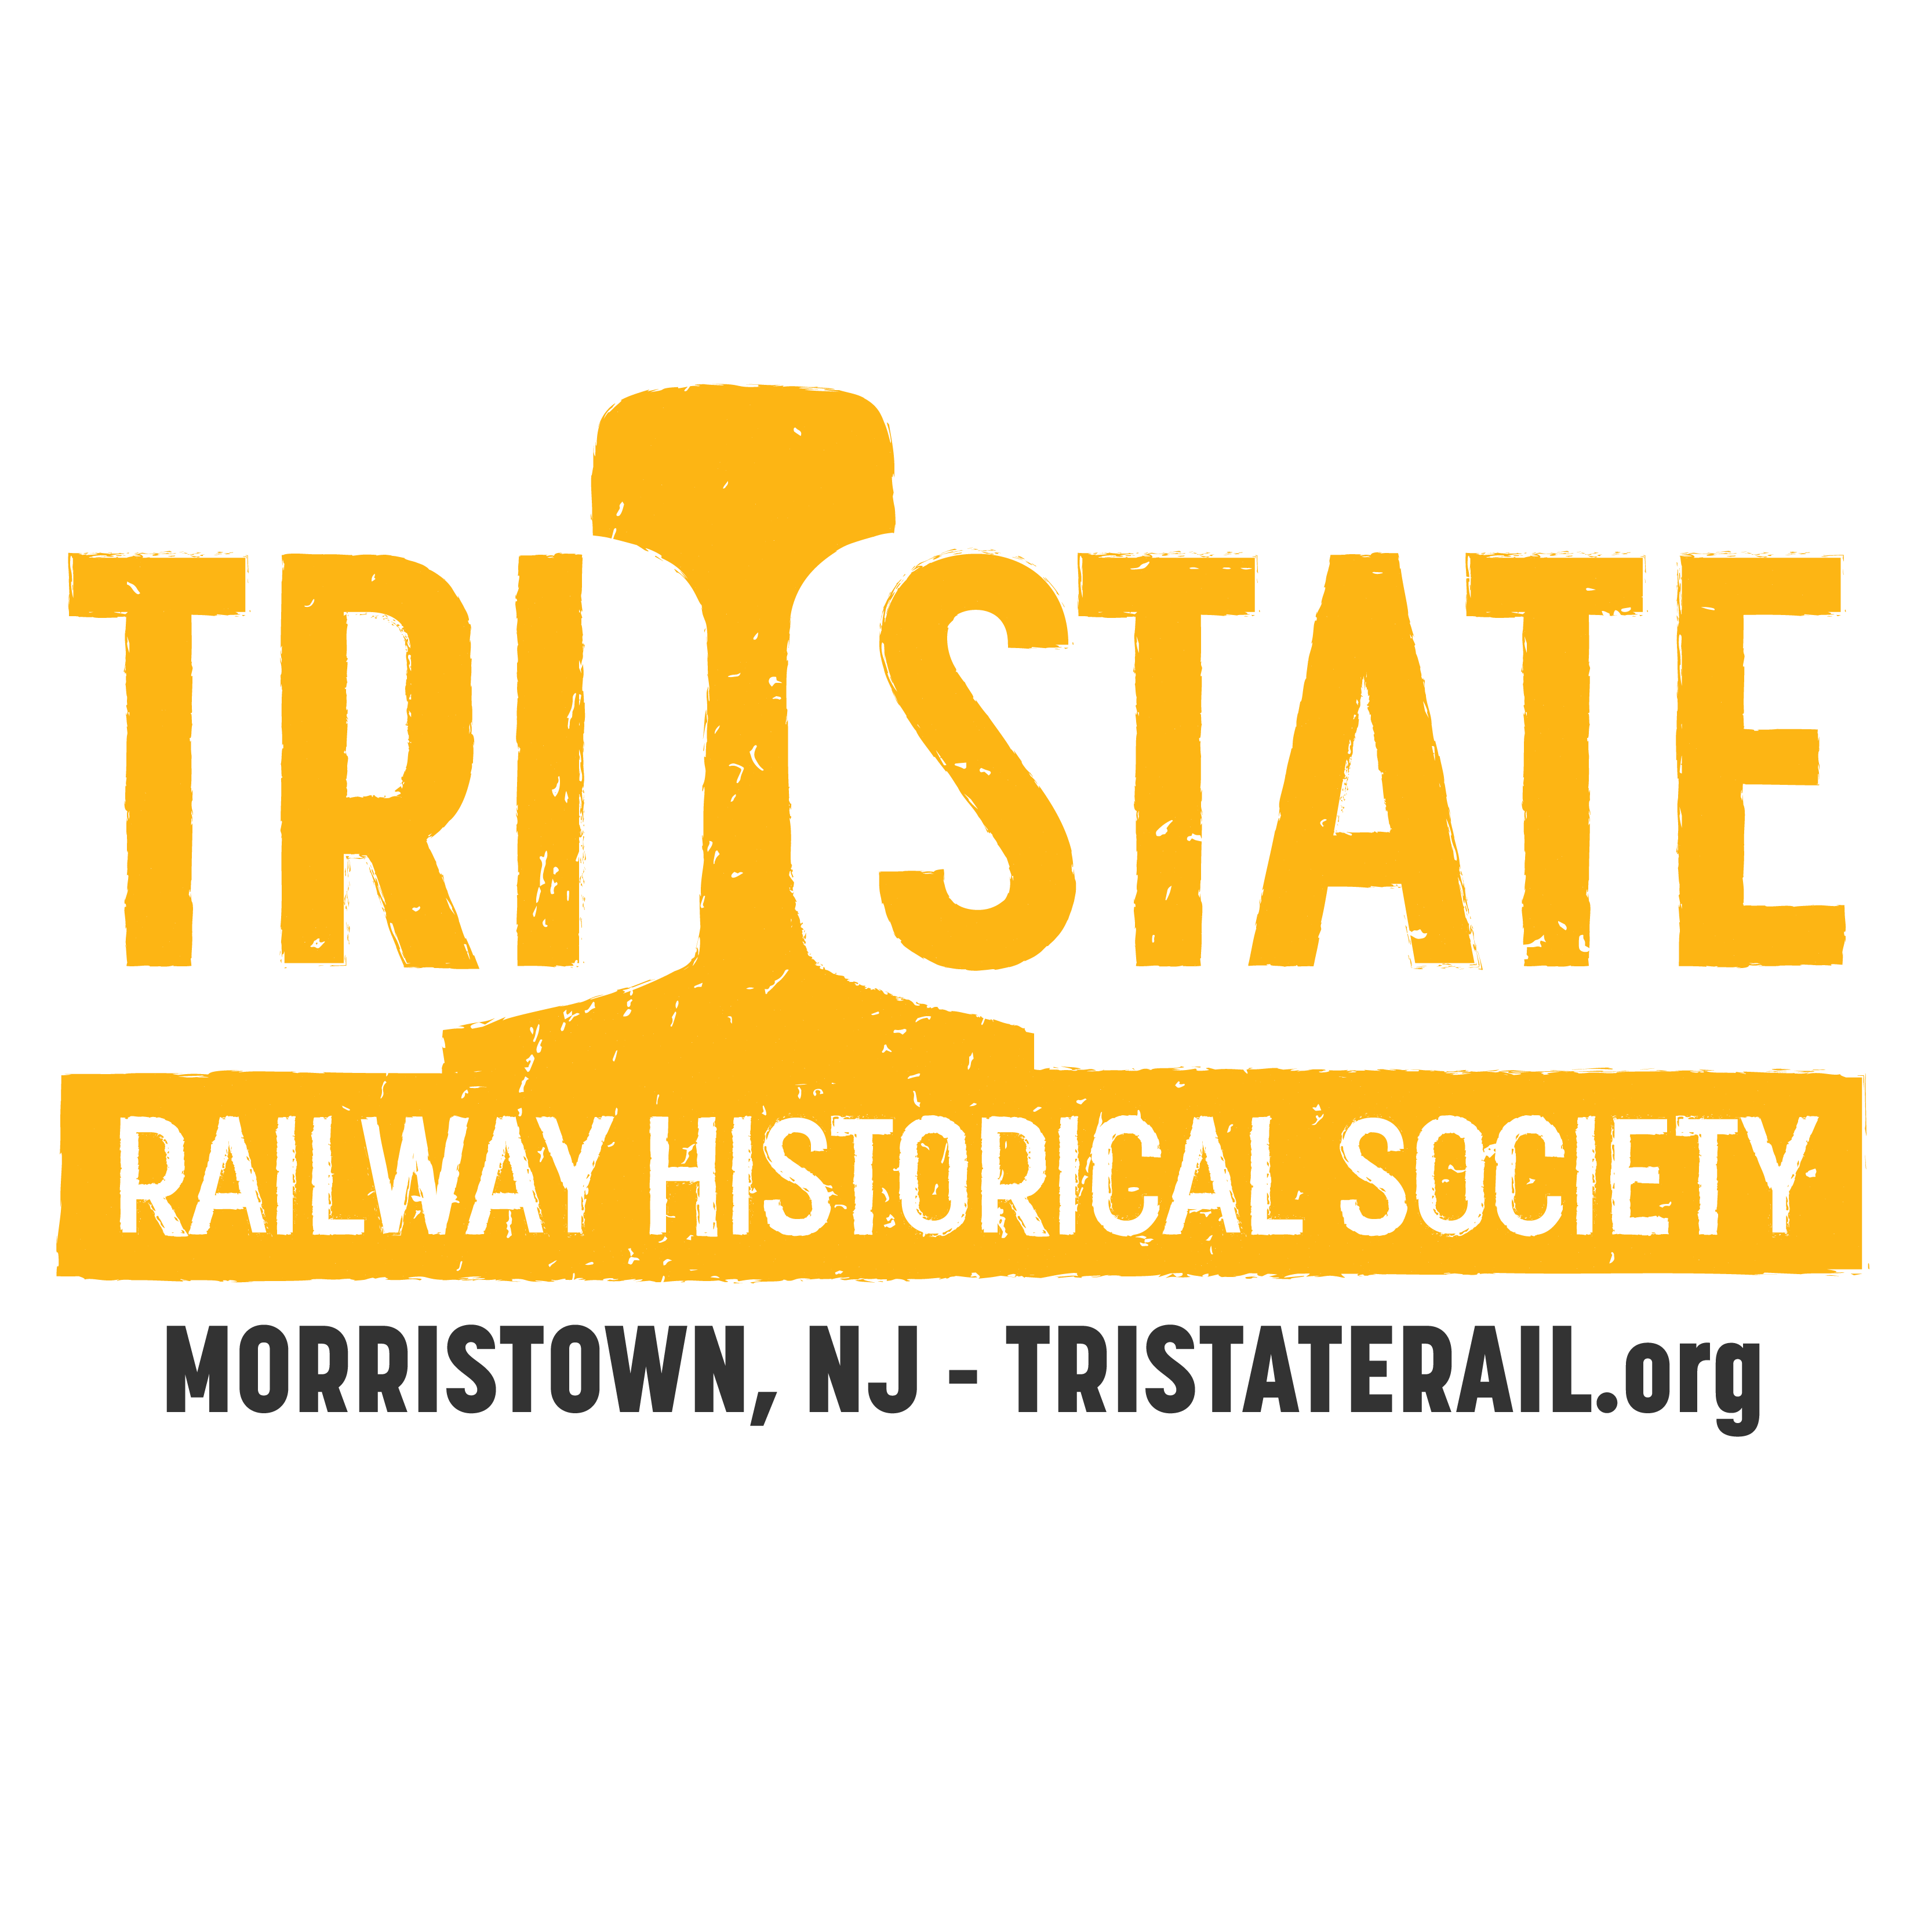 State Railway Historical Society